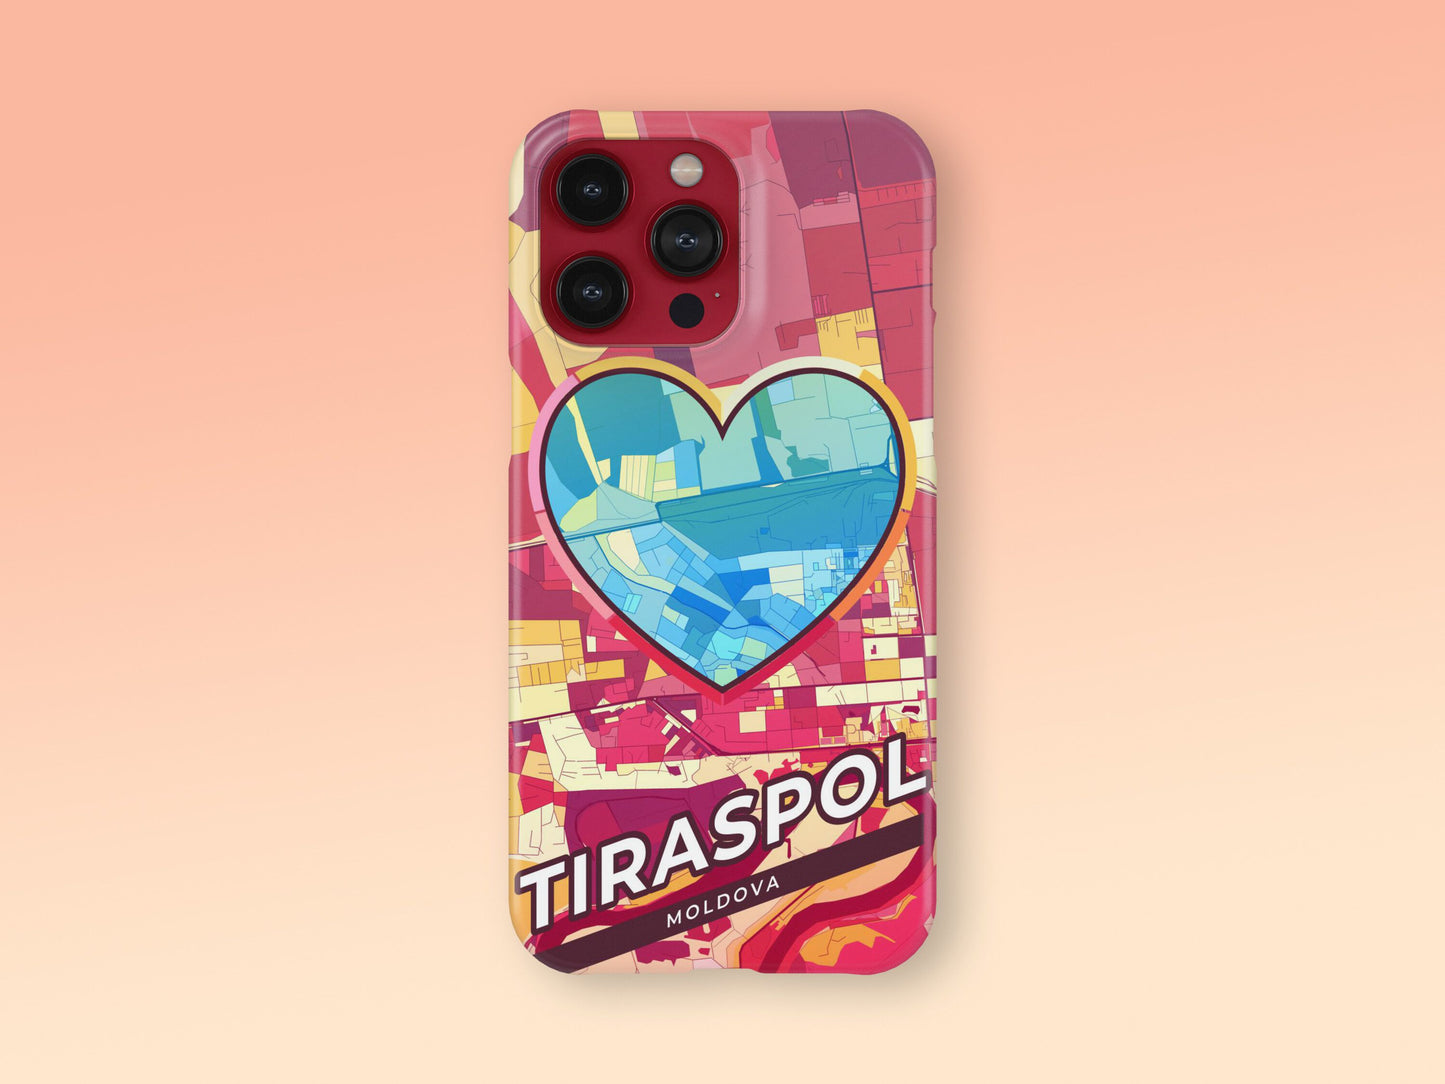 Tiraspol Moldova slim phone case with colorful icon 2